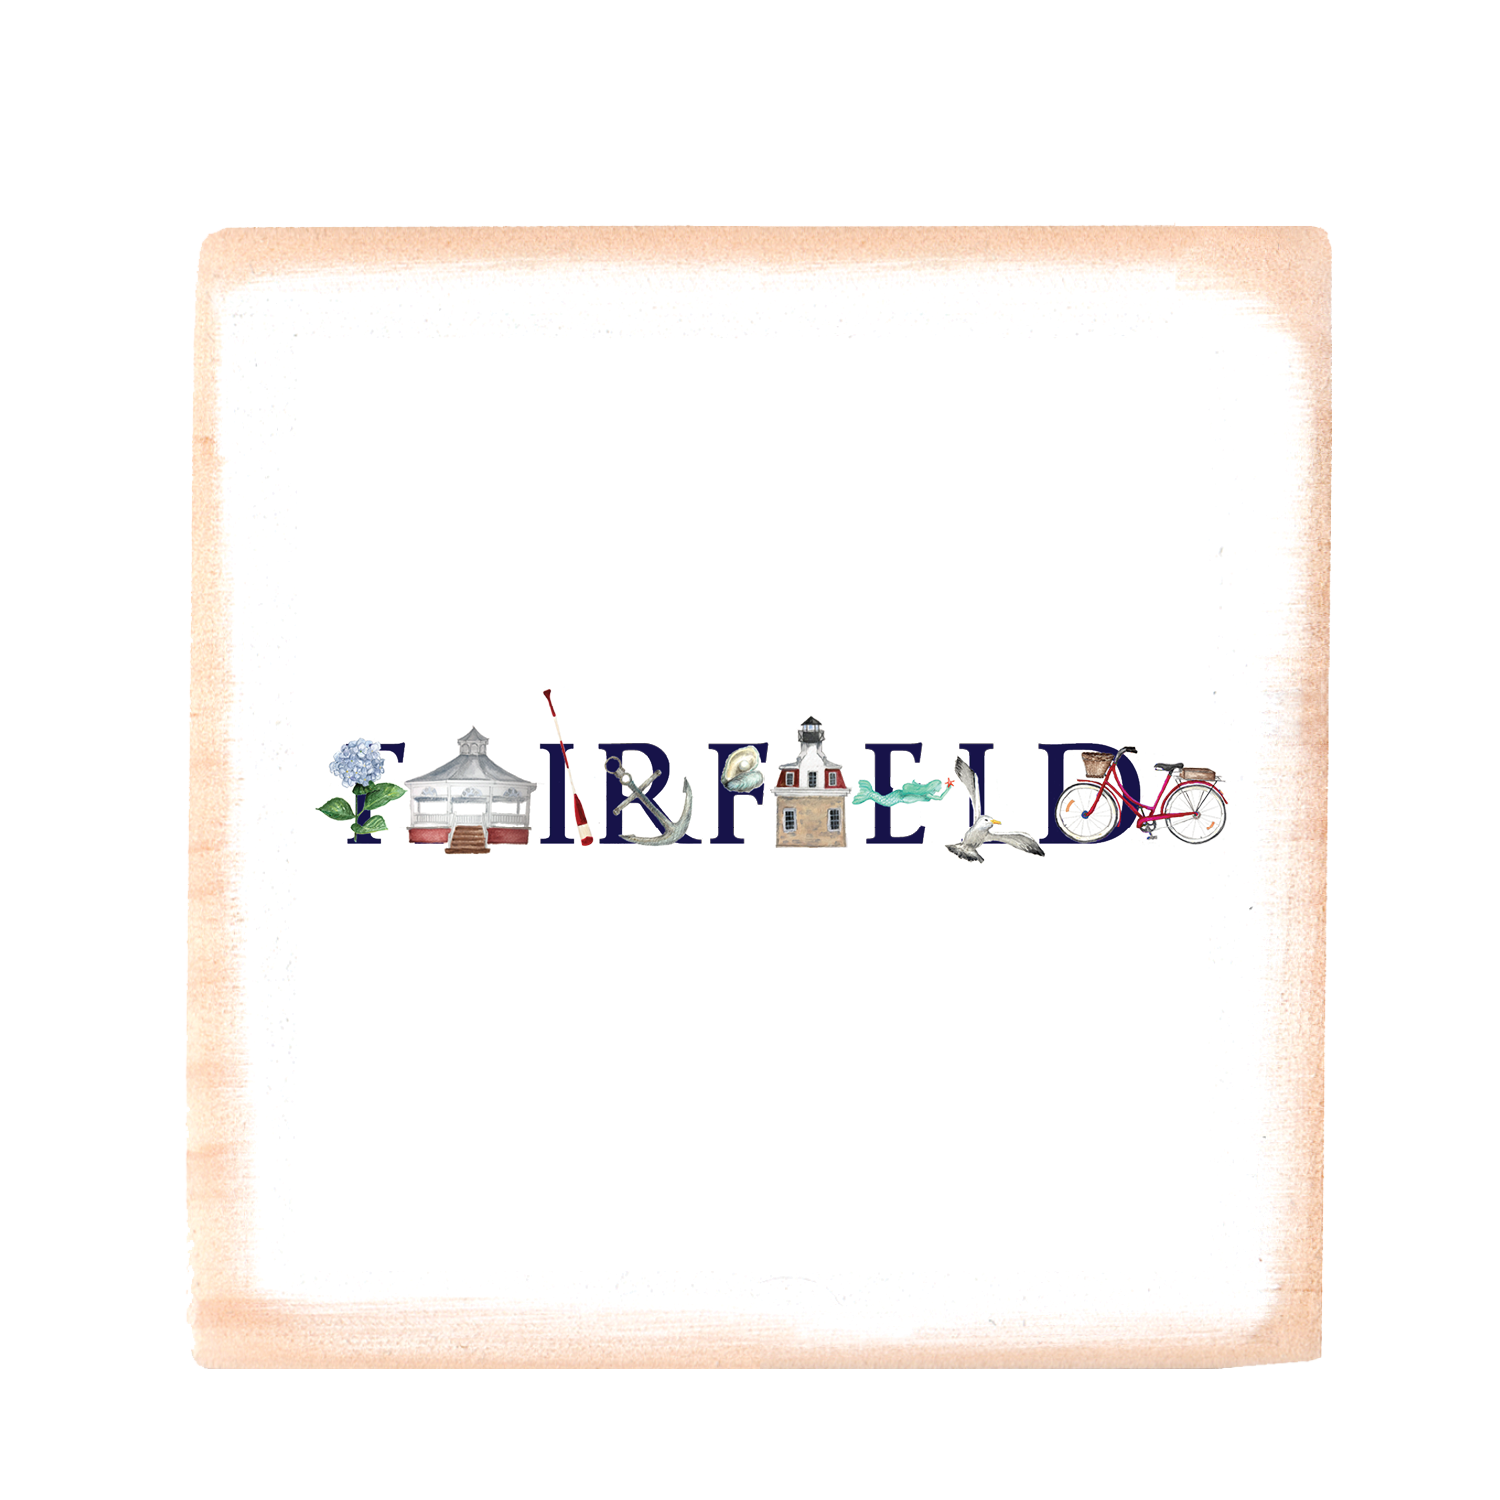 fairfield ct square wood block